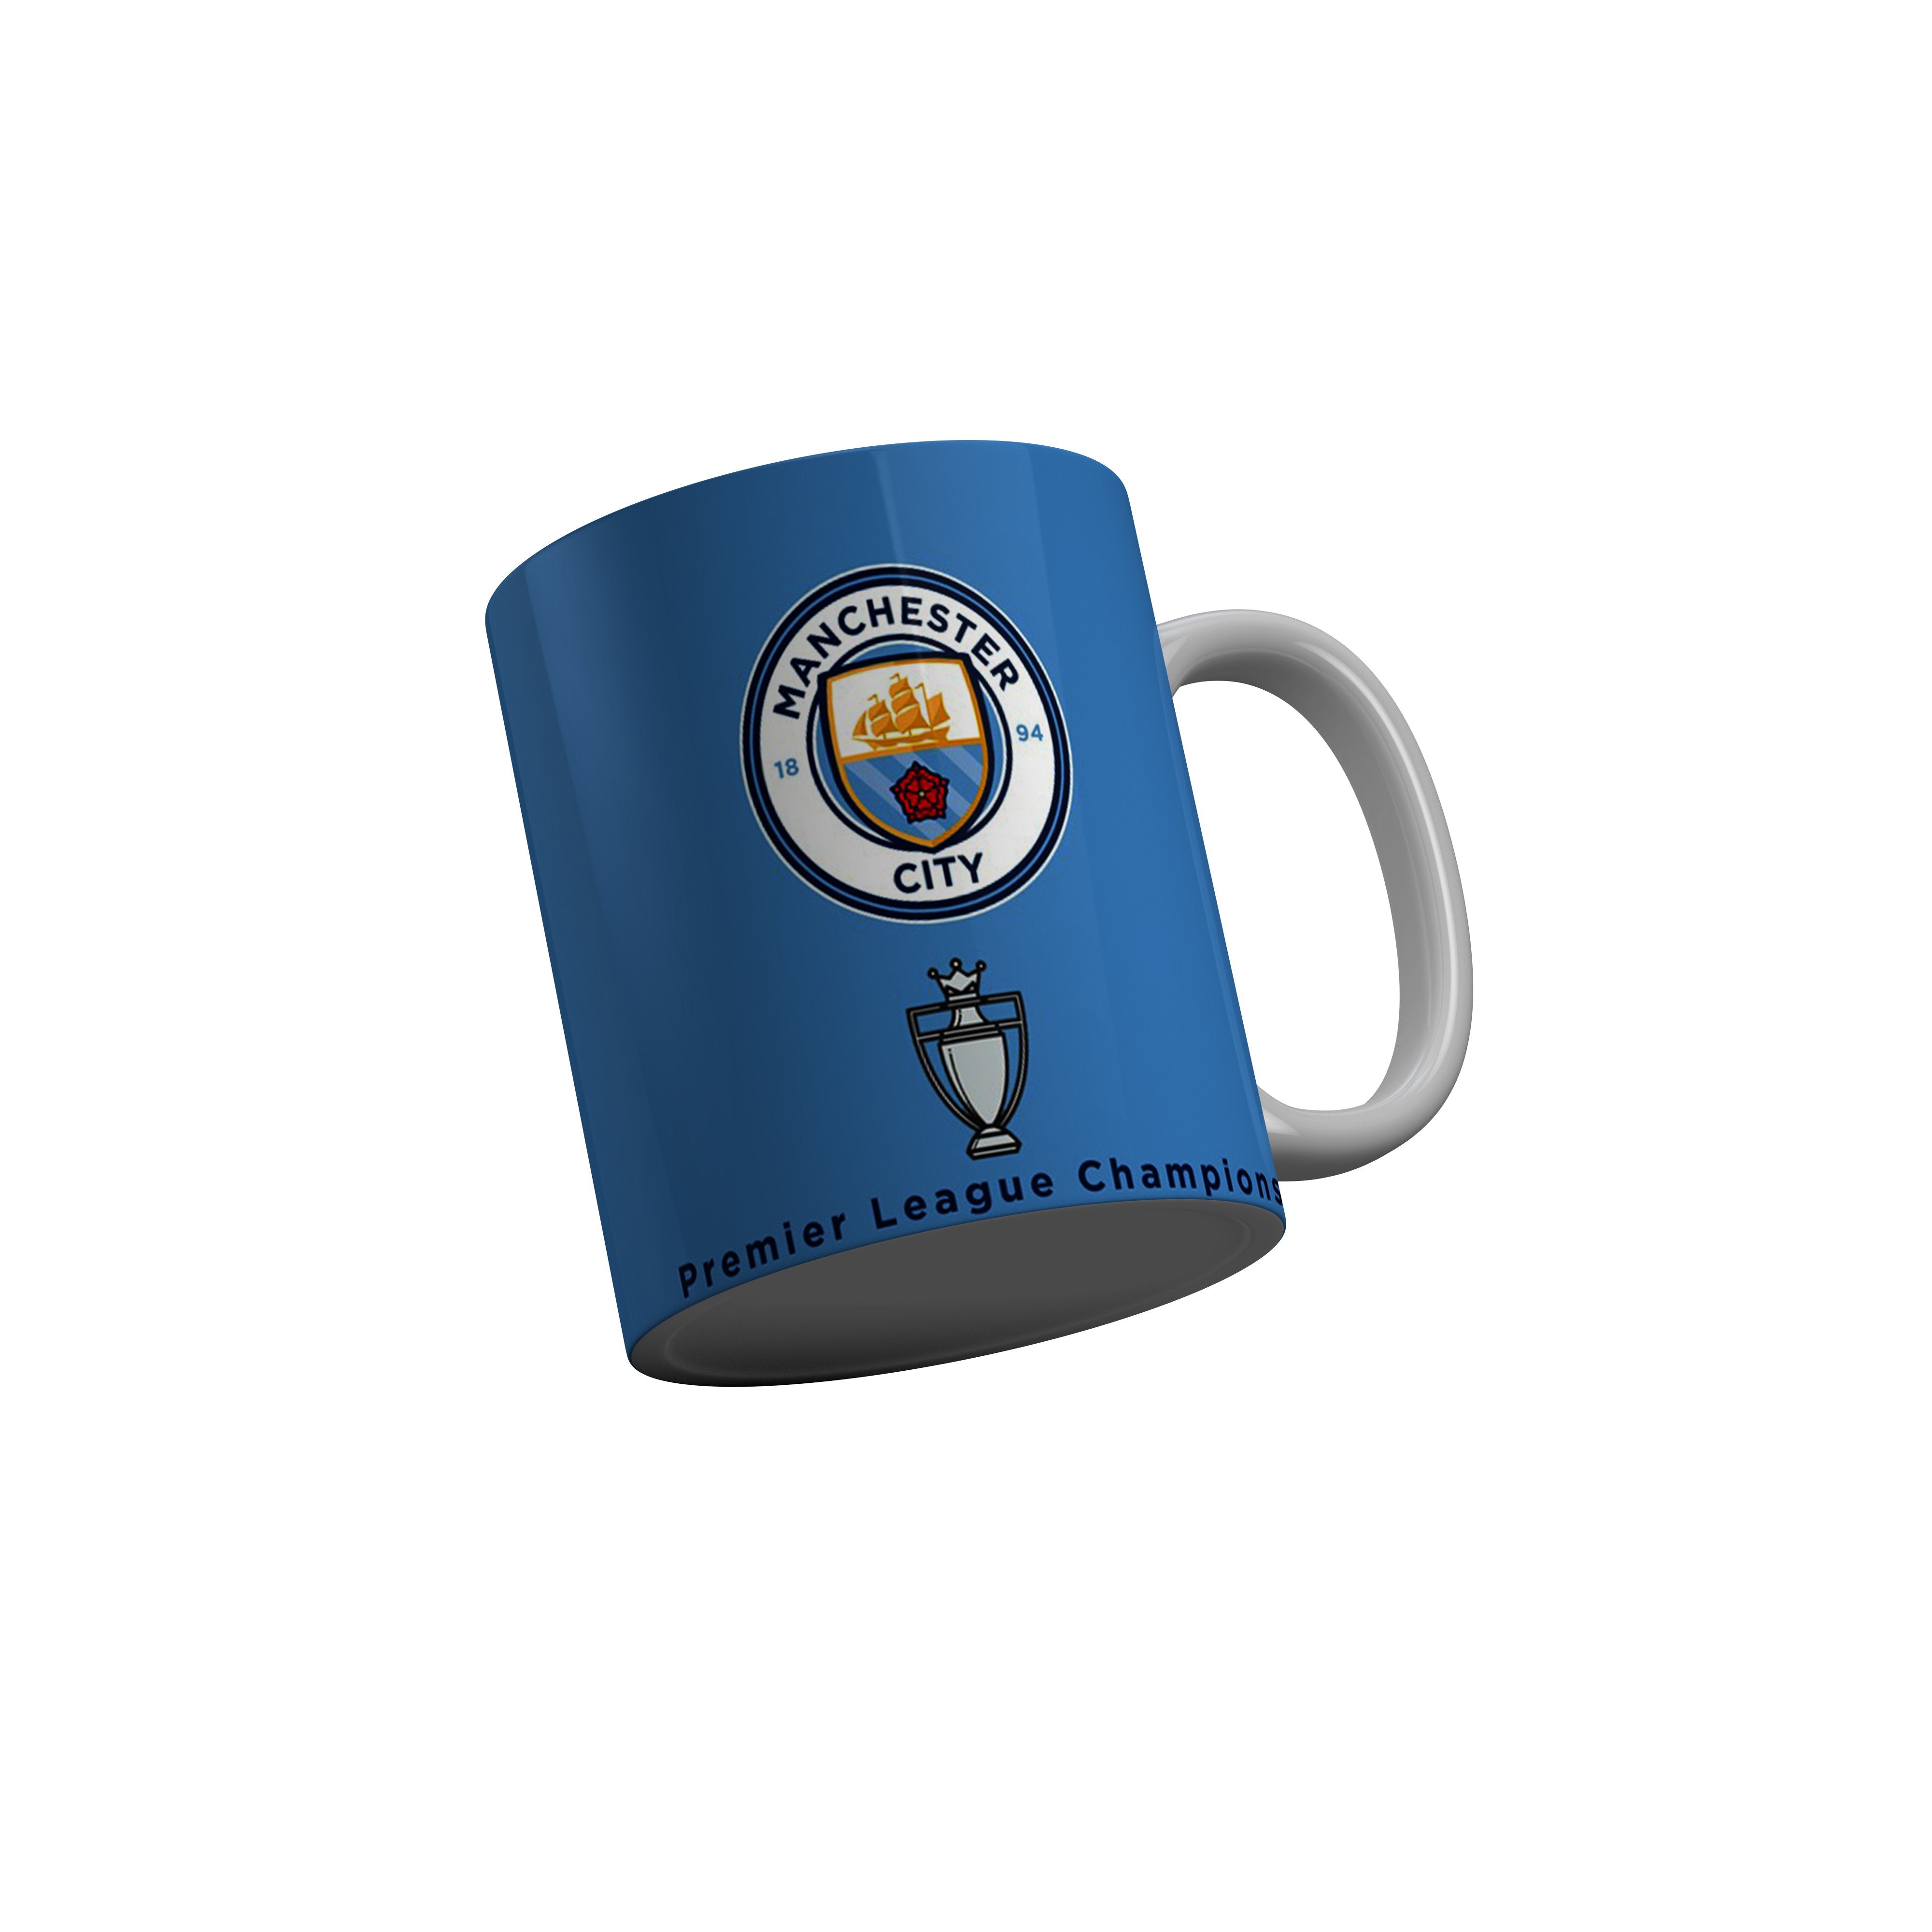 FashionRazor Manchester City Football Premier League Champions 2012-2014 Blue Ceramic Coffee Mug